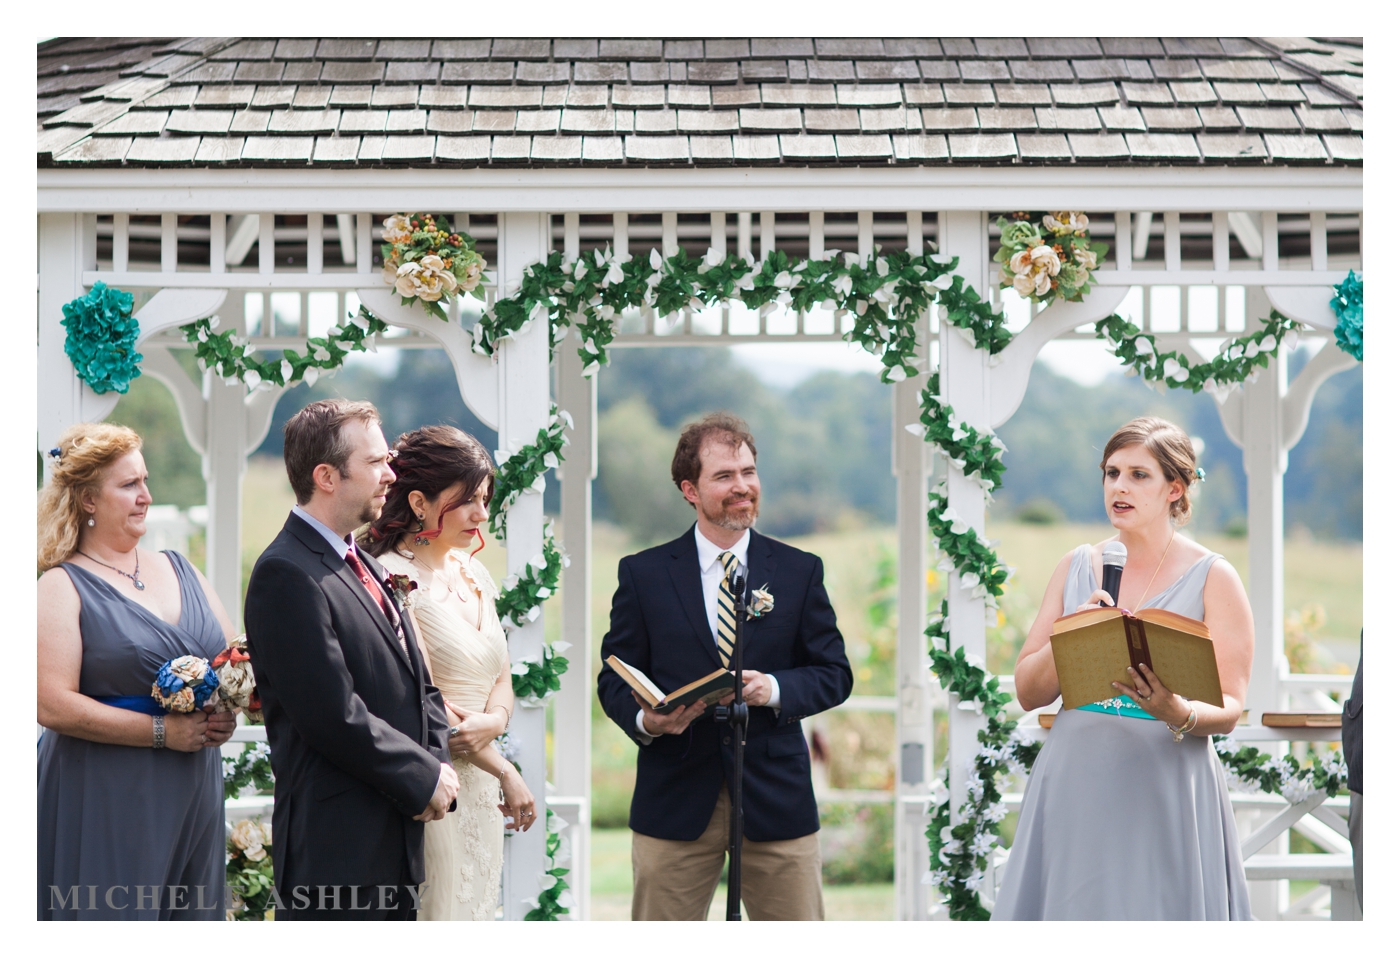 Salem Cross Inn Wedding | DIY Wedding | Kat + Evan | Michele Ashley Photography 12